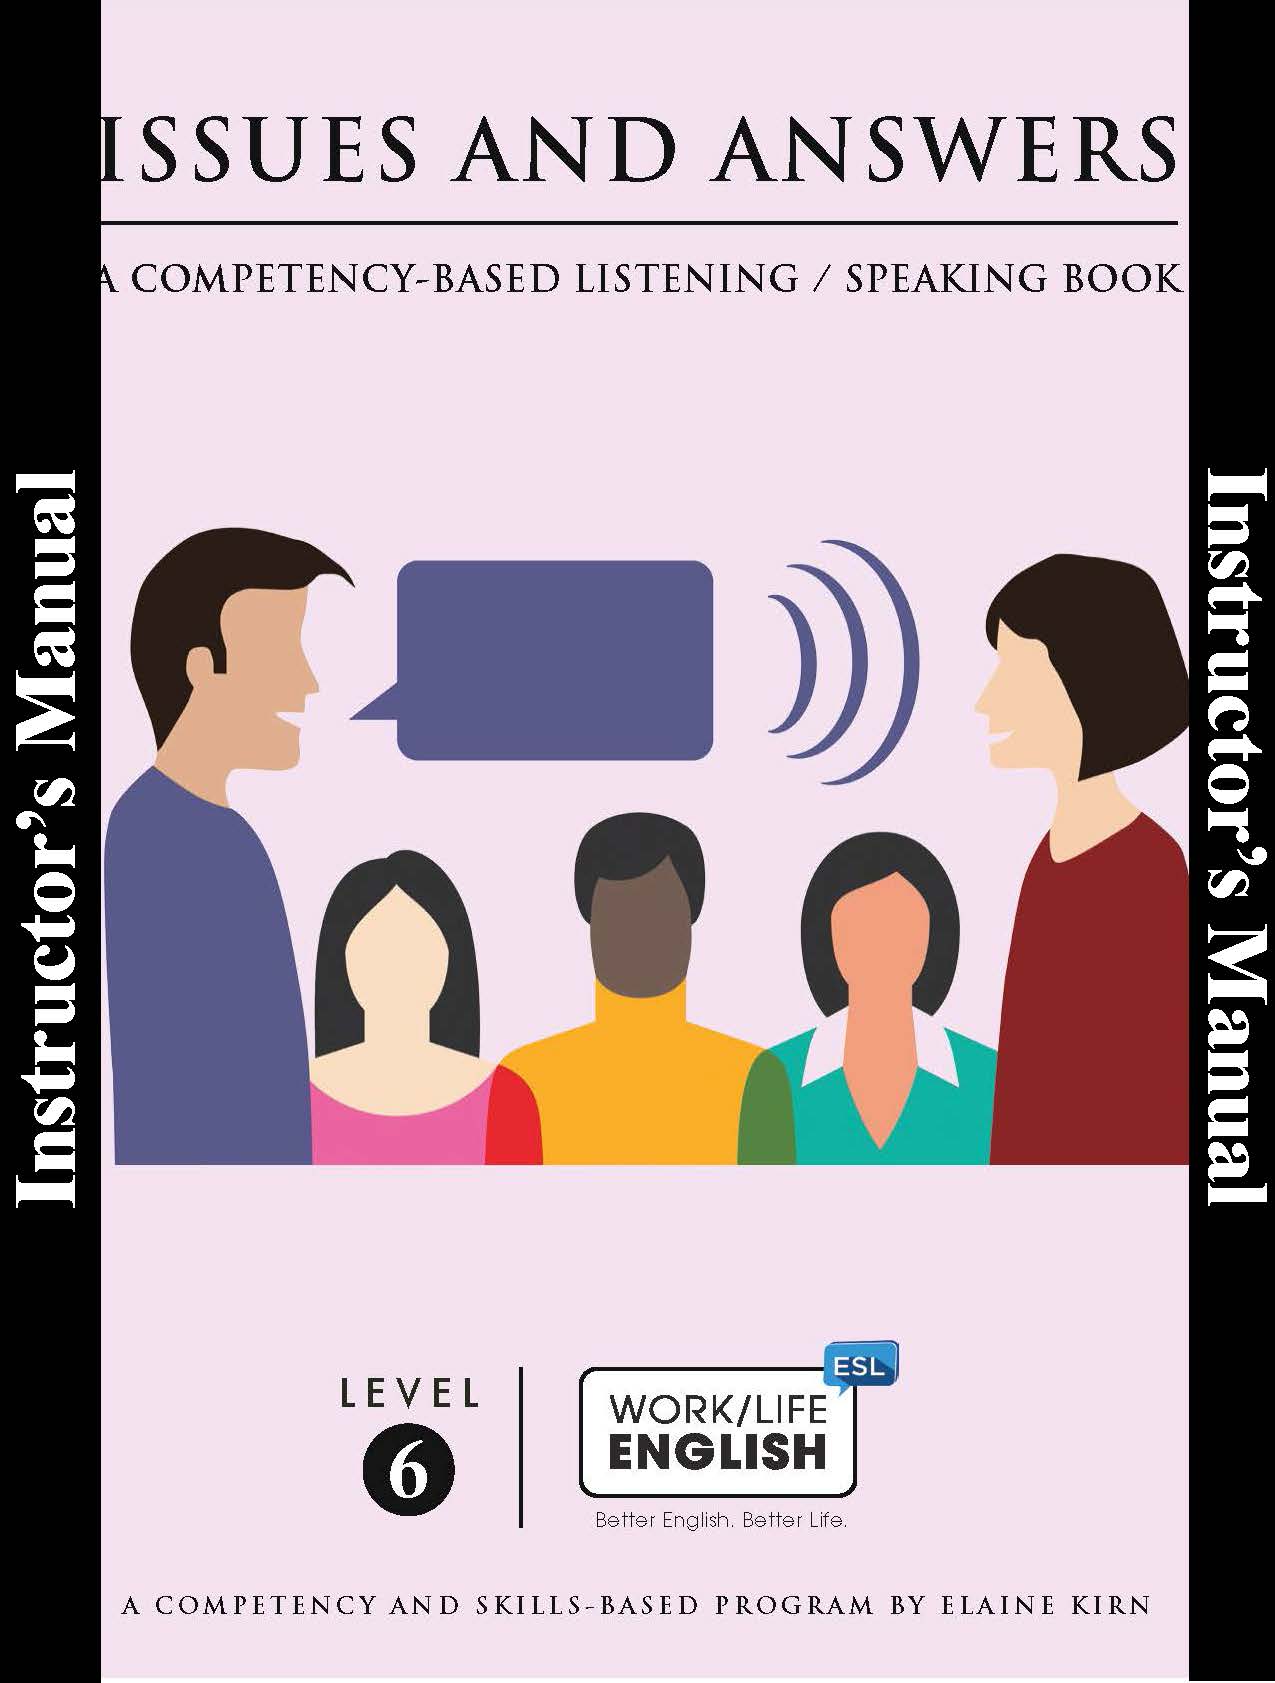 E.6.LS.T Work/Life English - Listening and Speaking - Level 6 - Teacher